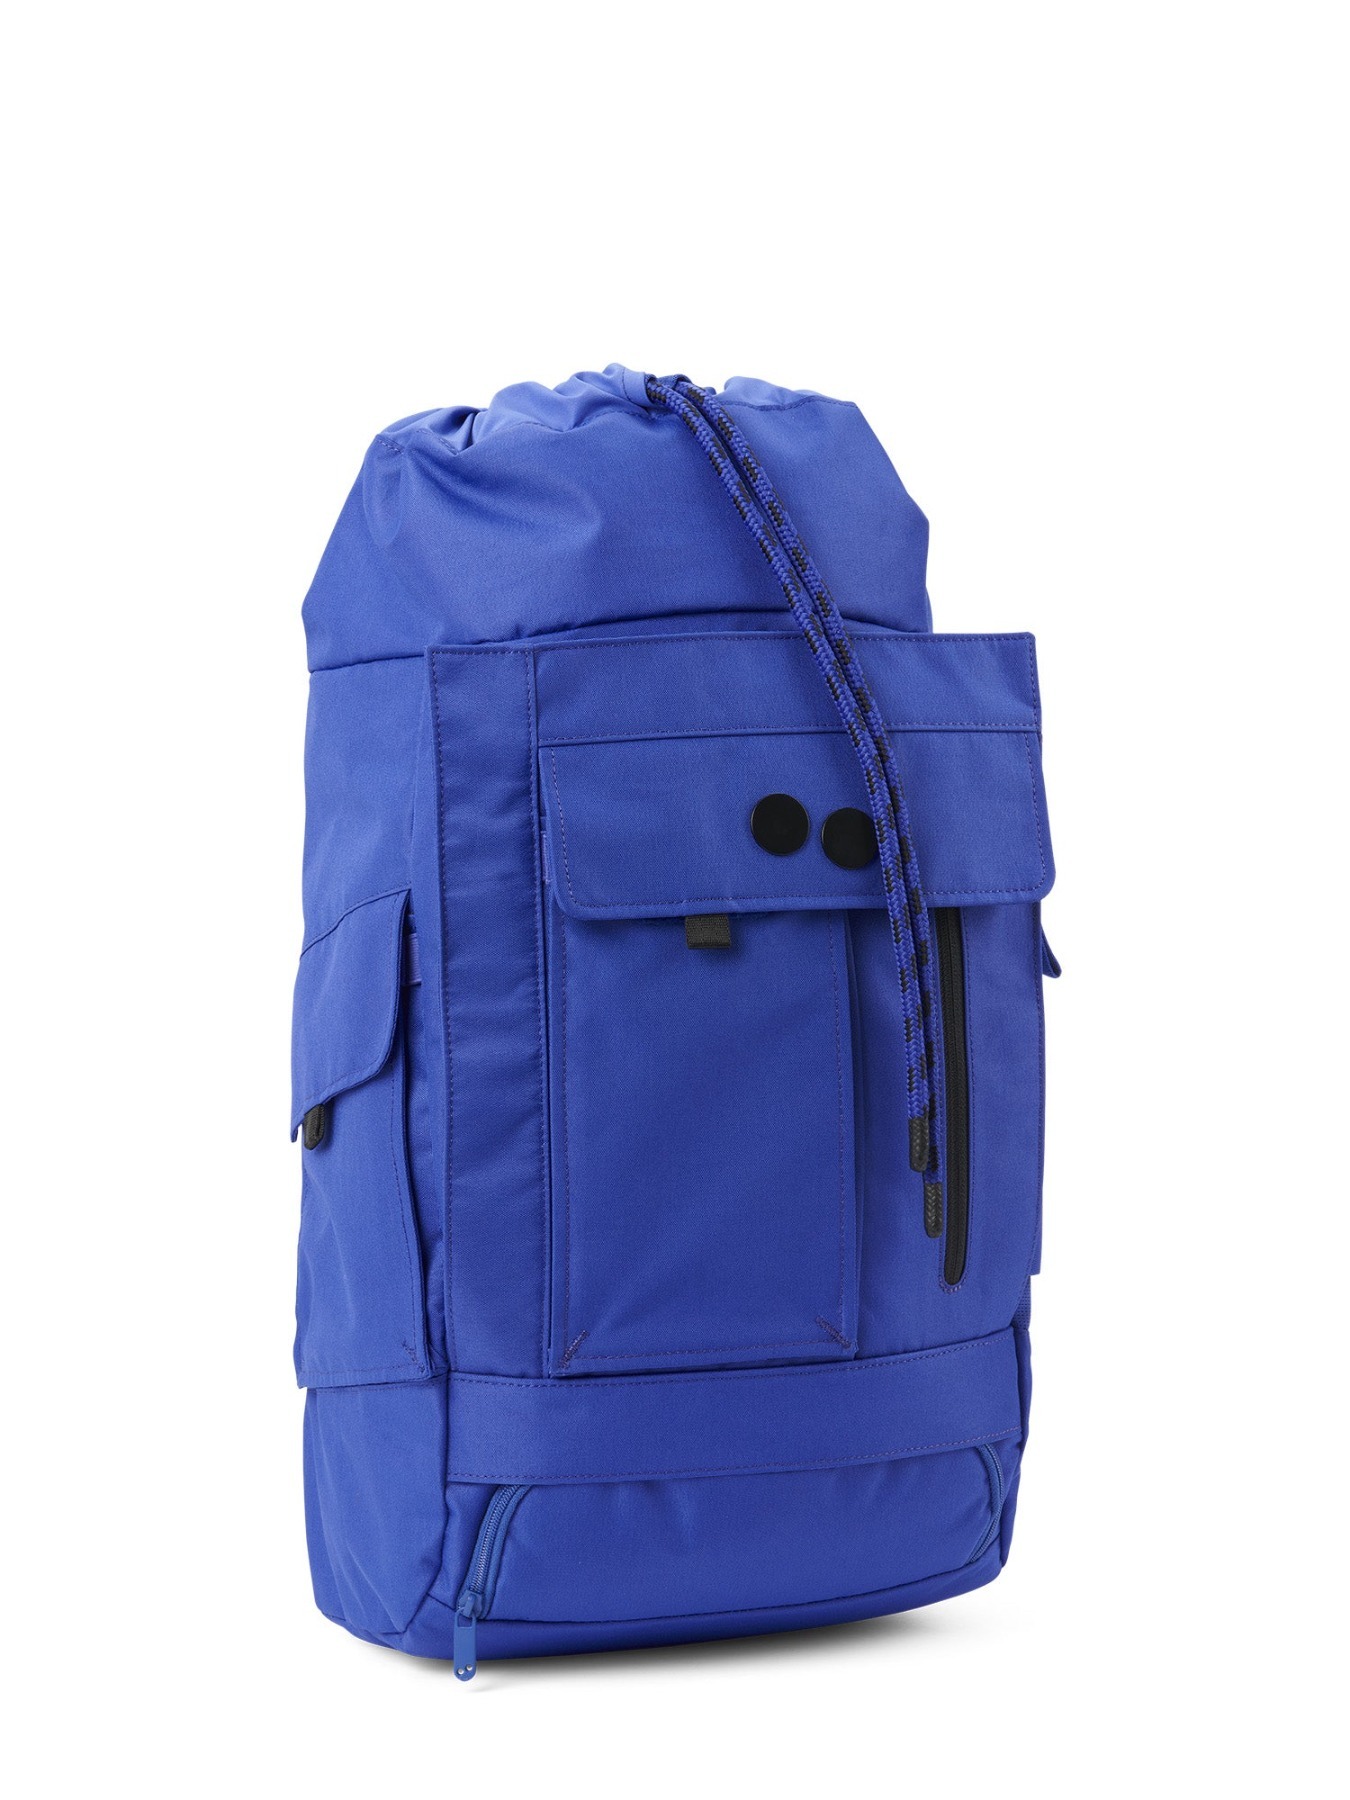 pinqponq Backpack BLOK medium Construct - Poppy Blue 2